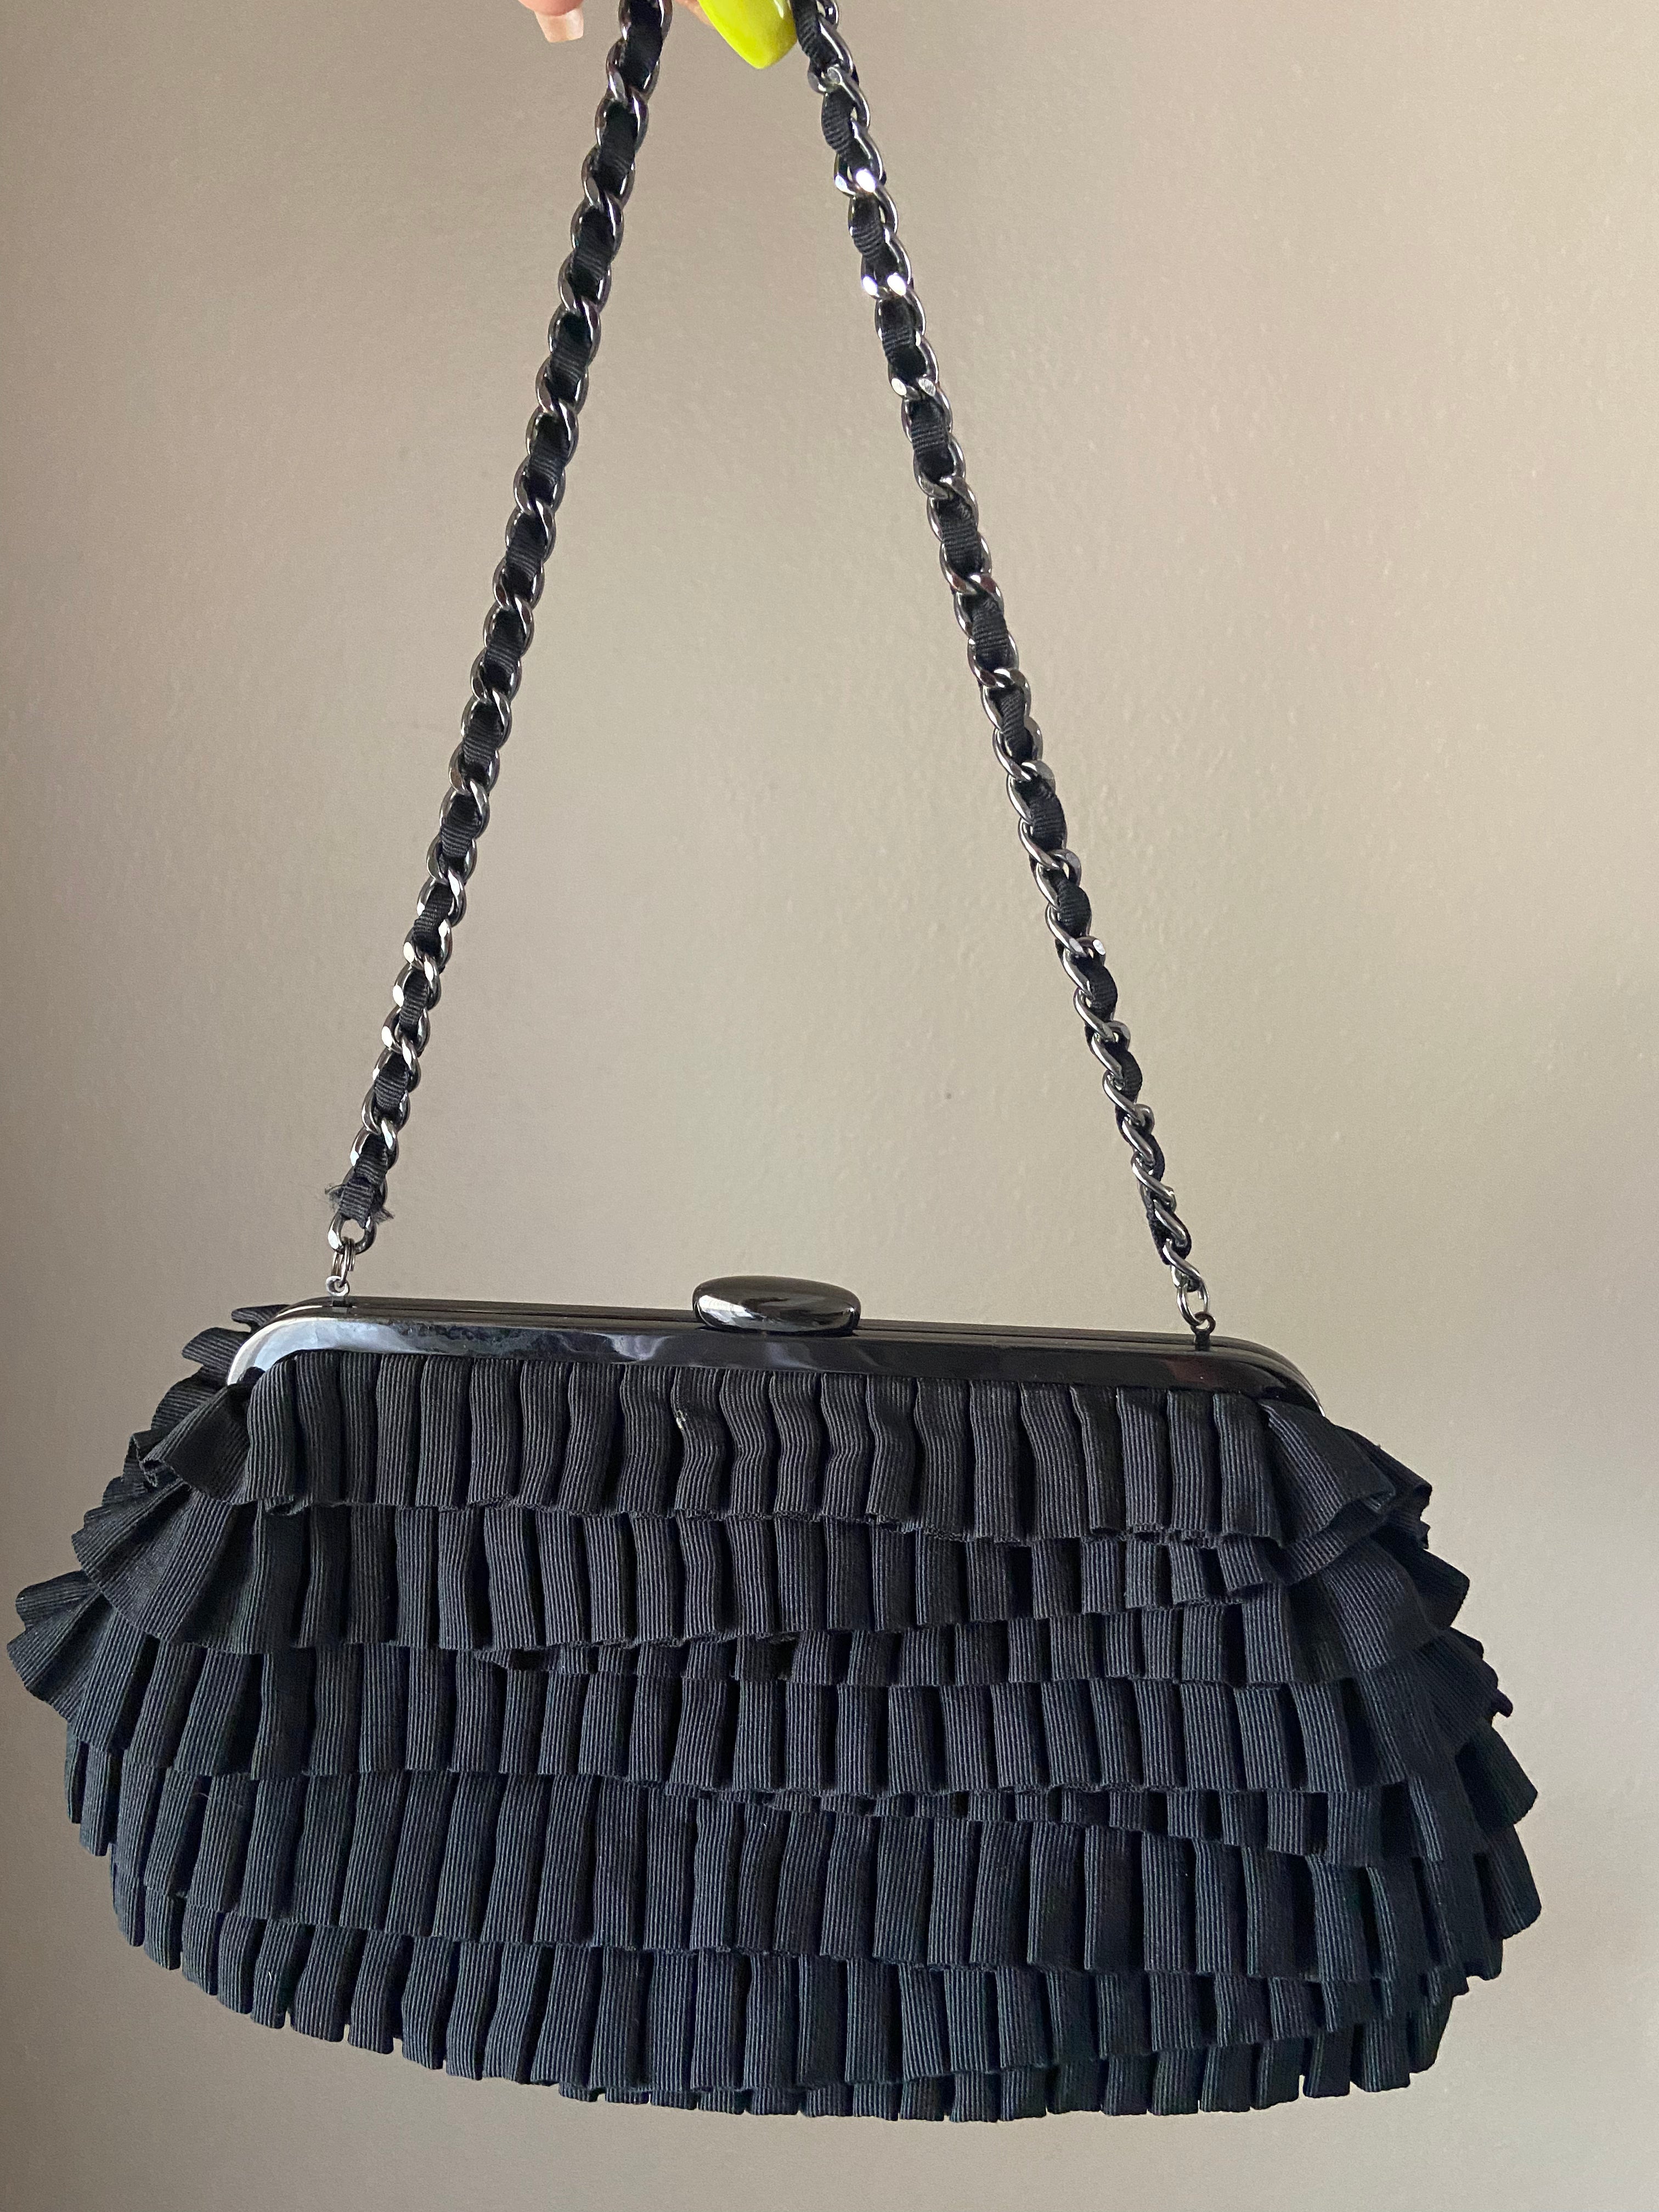 Black ruffle style purse